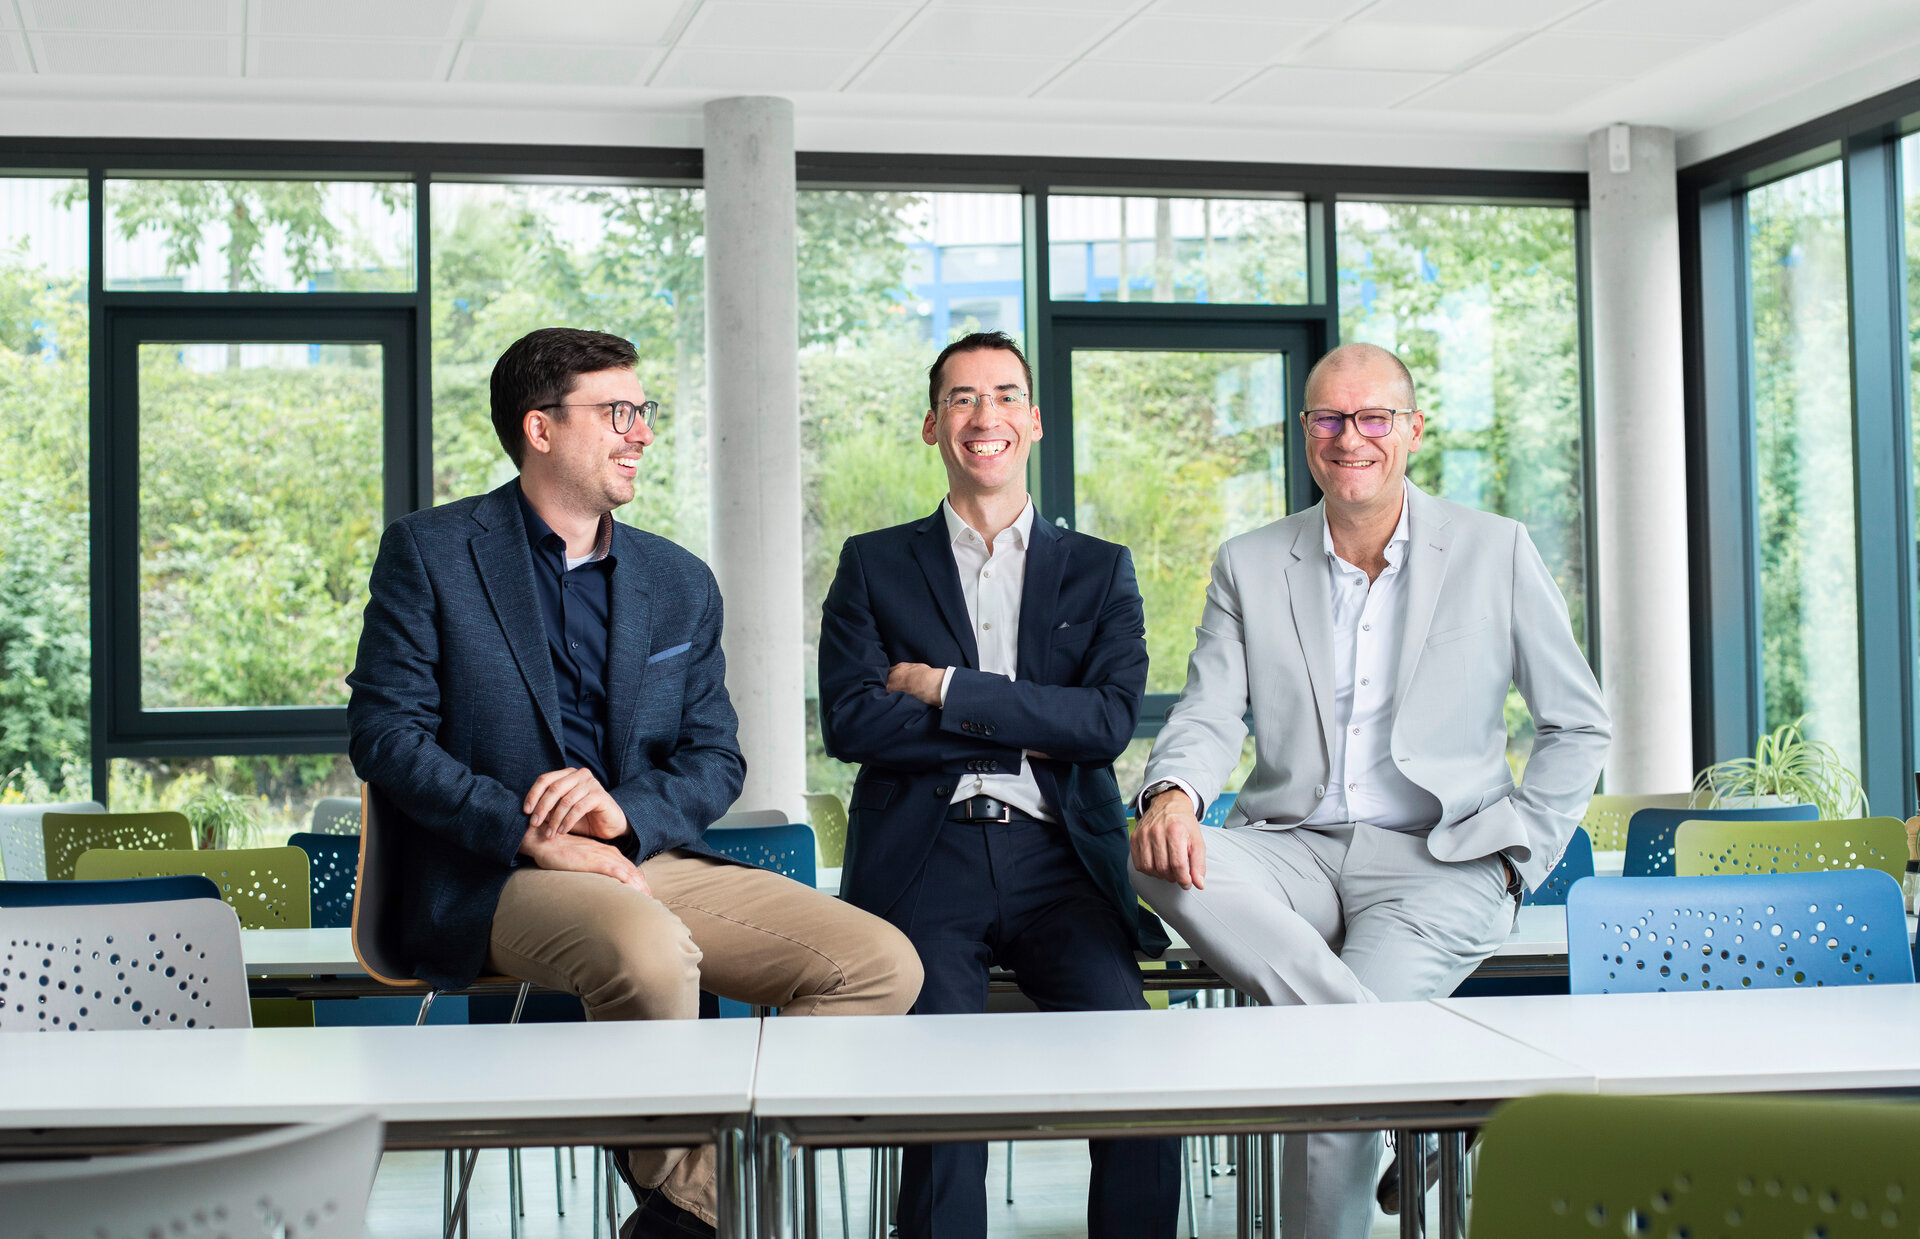 G&D management team consiting of Nils Strauch, Uwe Milde and Thorsten Lipp